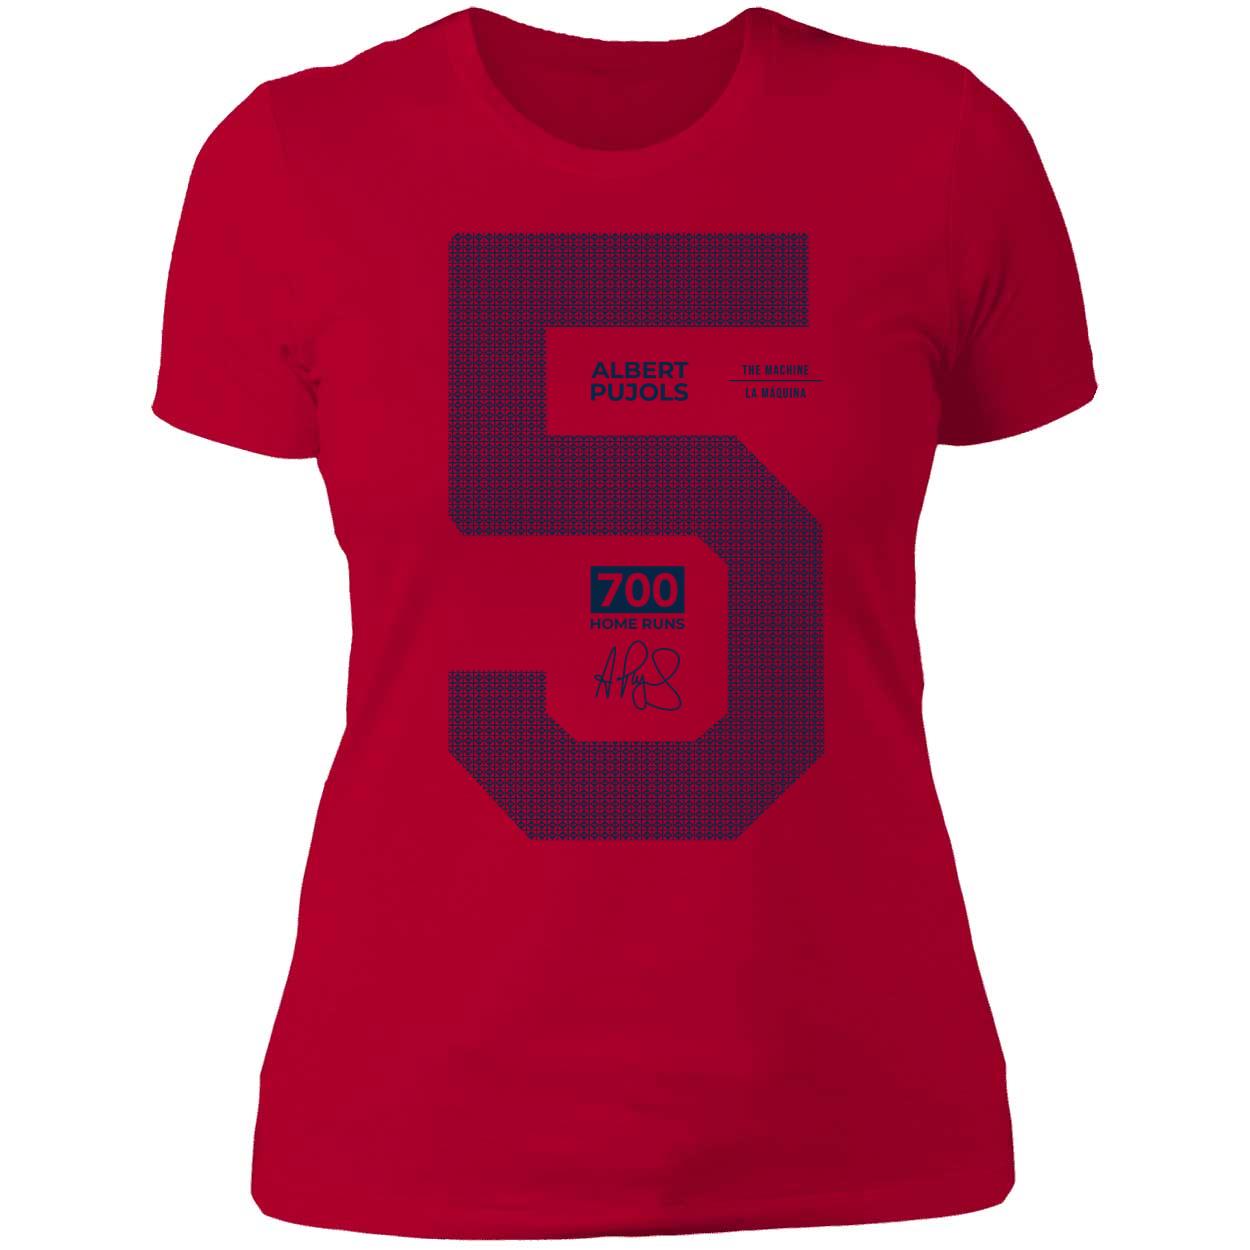 OneRockin 700 Career Home Runs Albert Pujols Premium SS T-Shirt